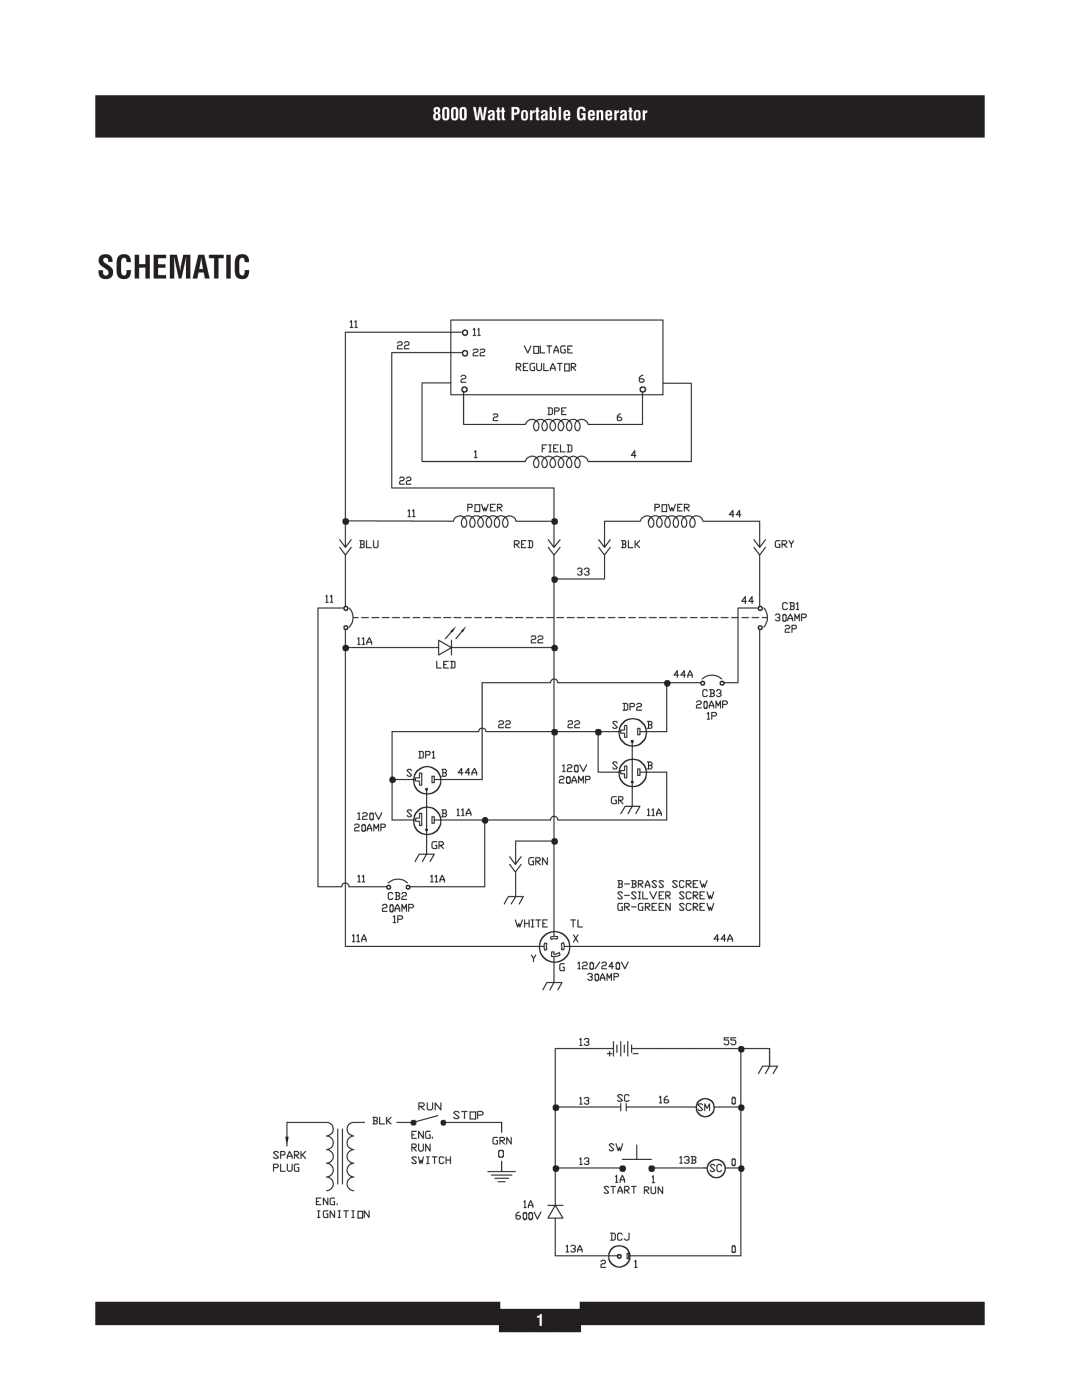 Briggs & Stratton 030426 manual Schematic, Watt Portable Generator 